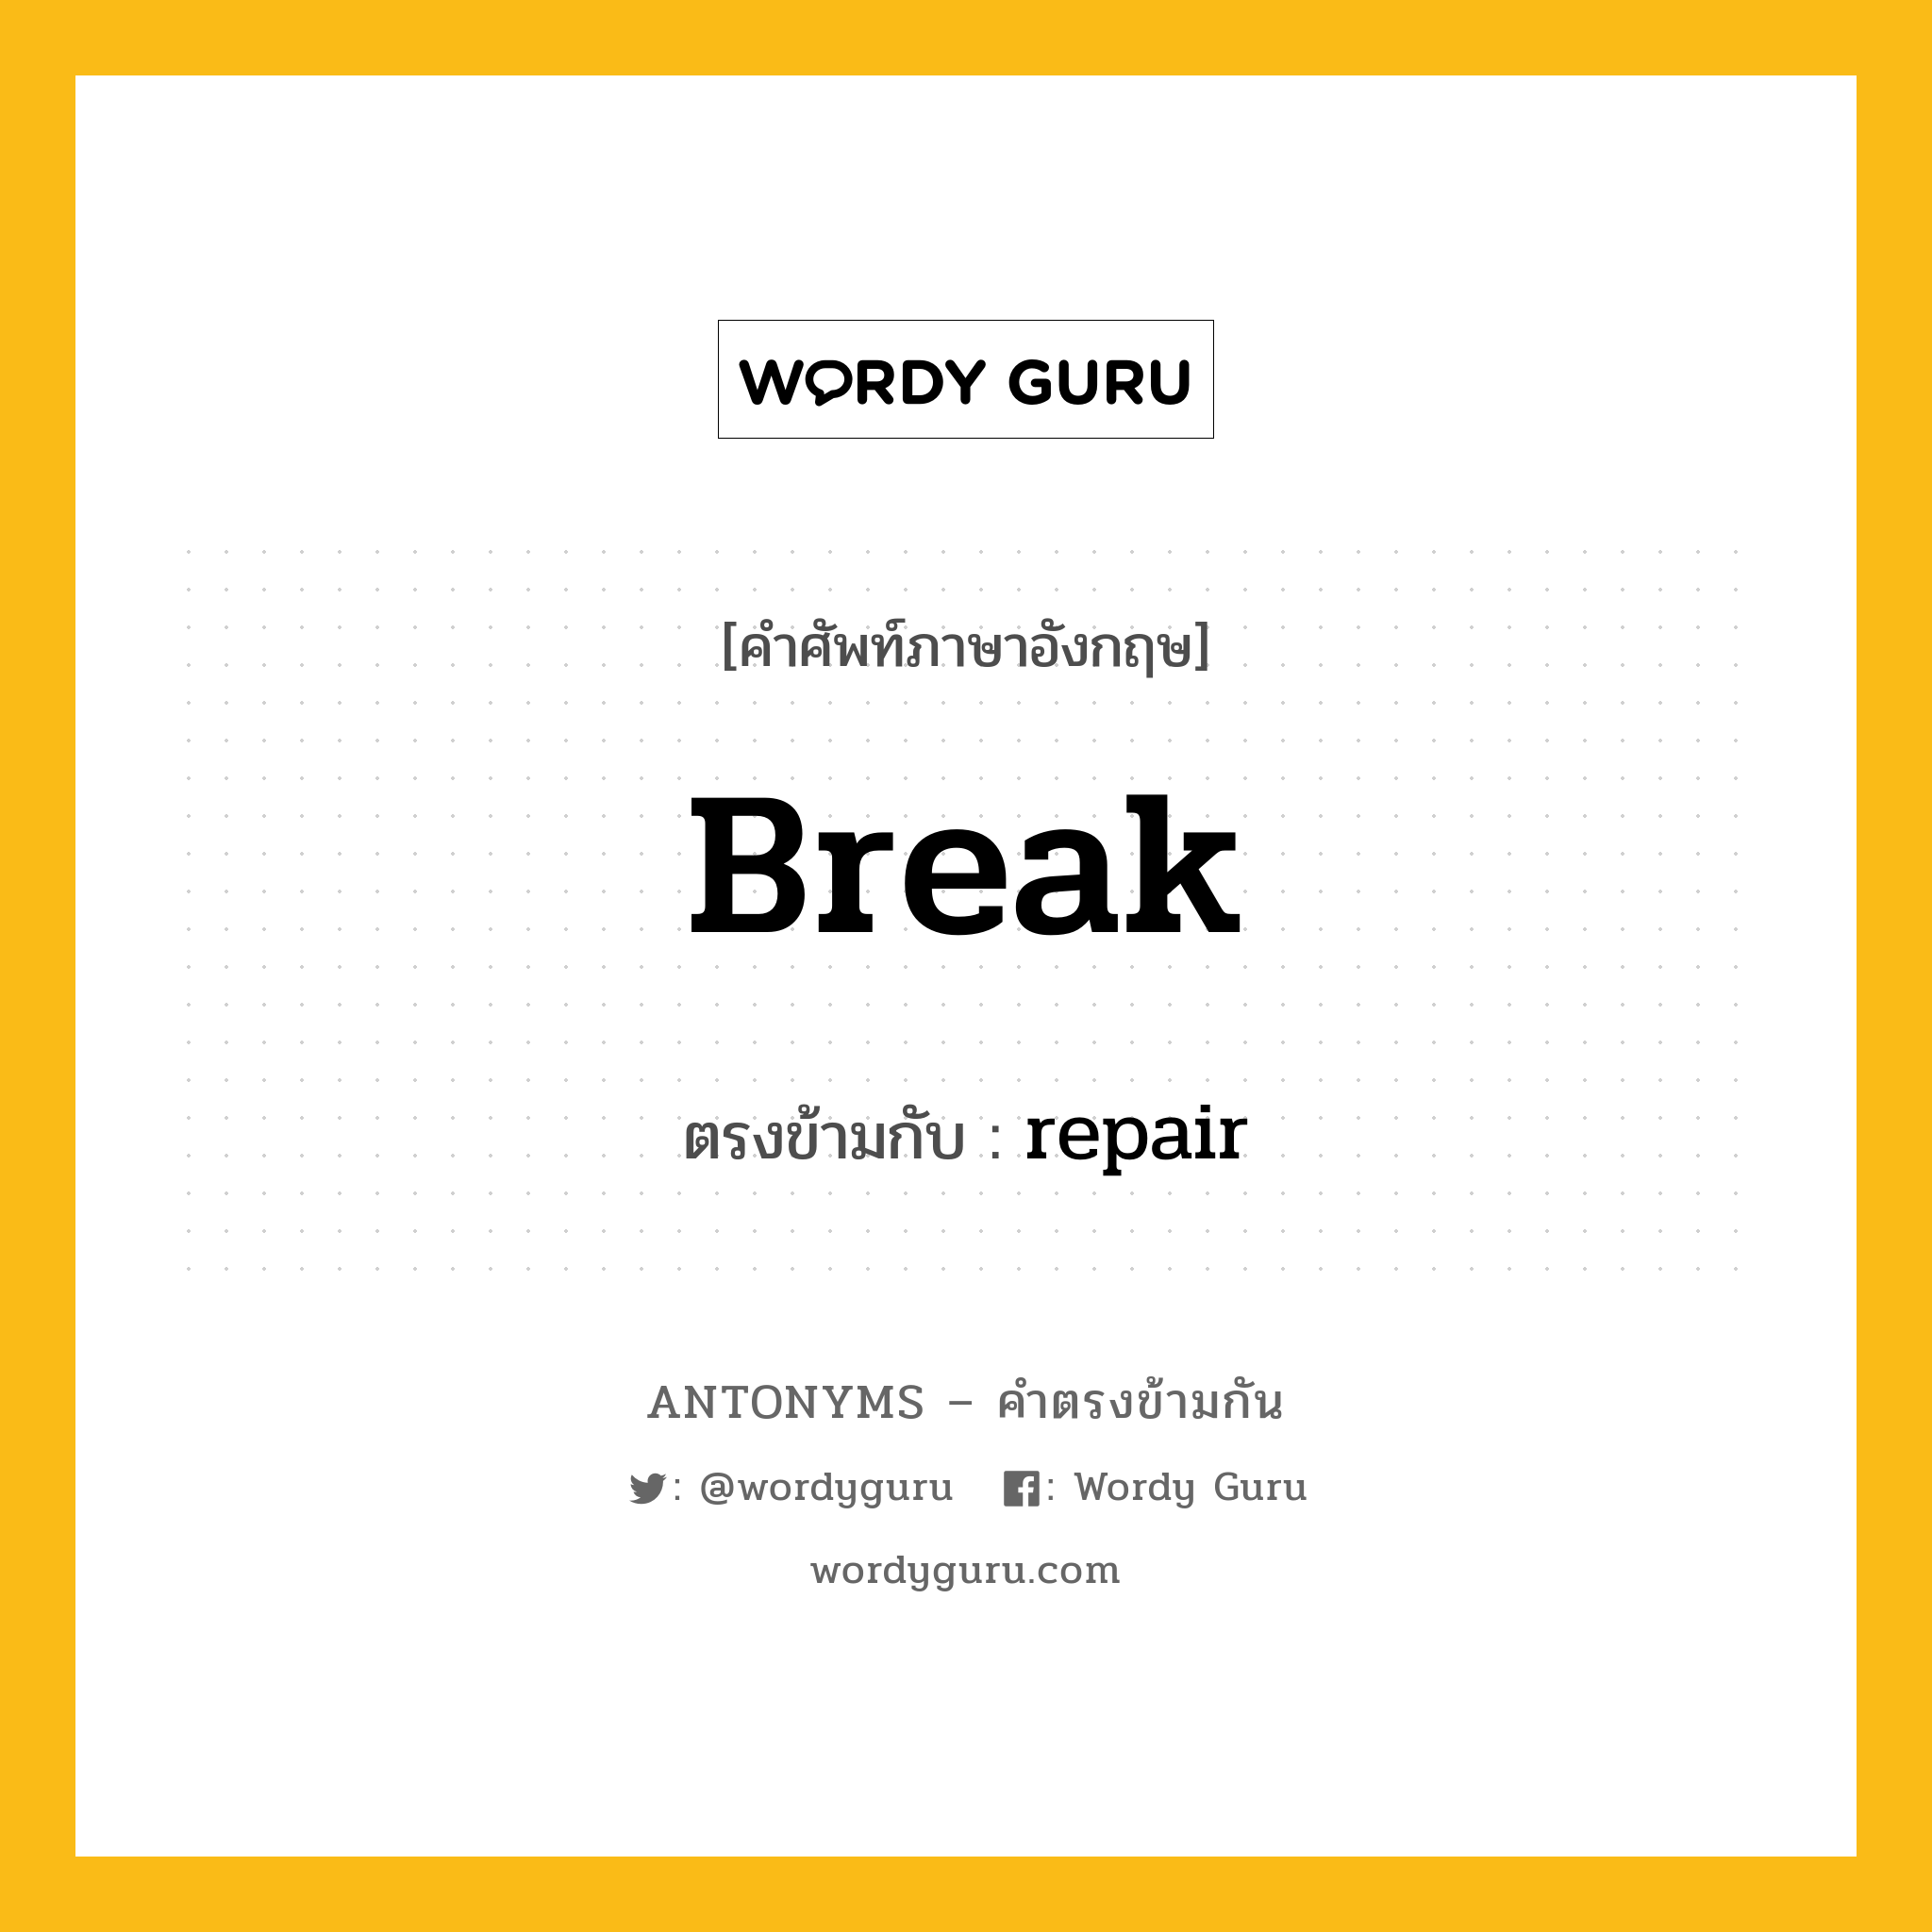 break เป็นคำตรงข้ามกับคำไหนบ้าง?, คำศัพท์ภาษาอังกฤษ break ตรงข้ามกับ repair หมวด repair